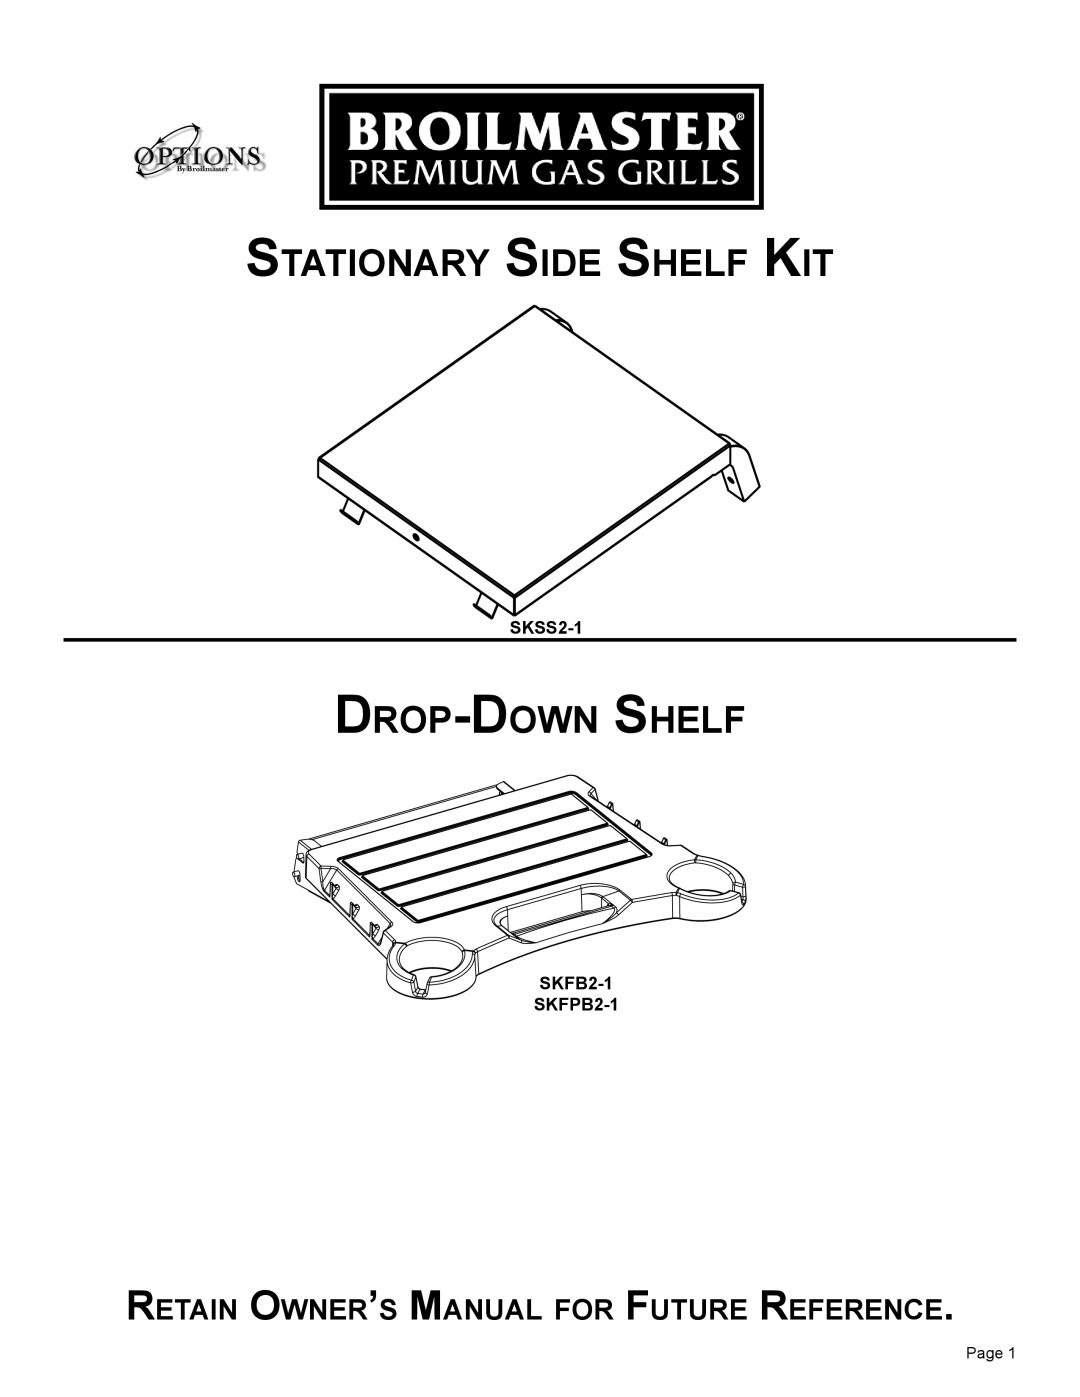 Broilmaster owner manual Stationary Side Shelf Kit, Drop-Down Shelf, SKSS2-1, SKFB2-1 SKFPB2-1 